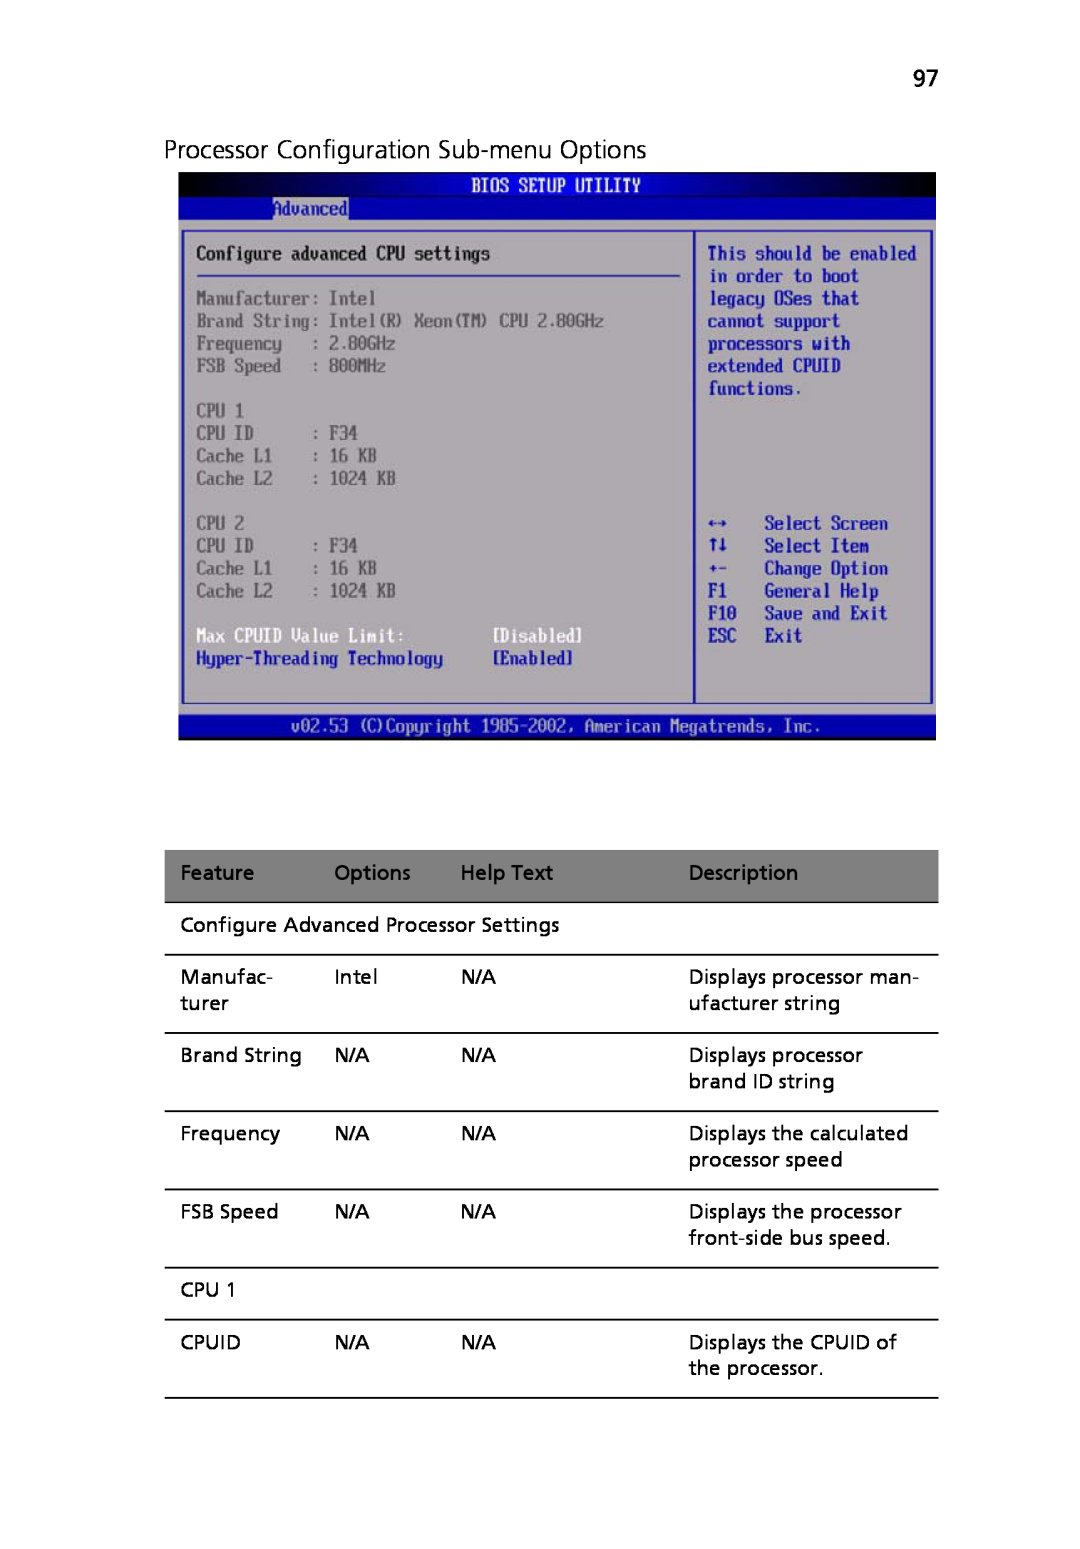 Acer Altos R710 manual Processor Configuration Sub-menu Options, Feature, Help Text, Description 